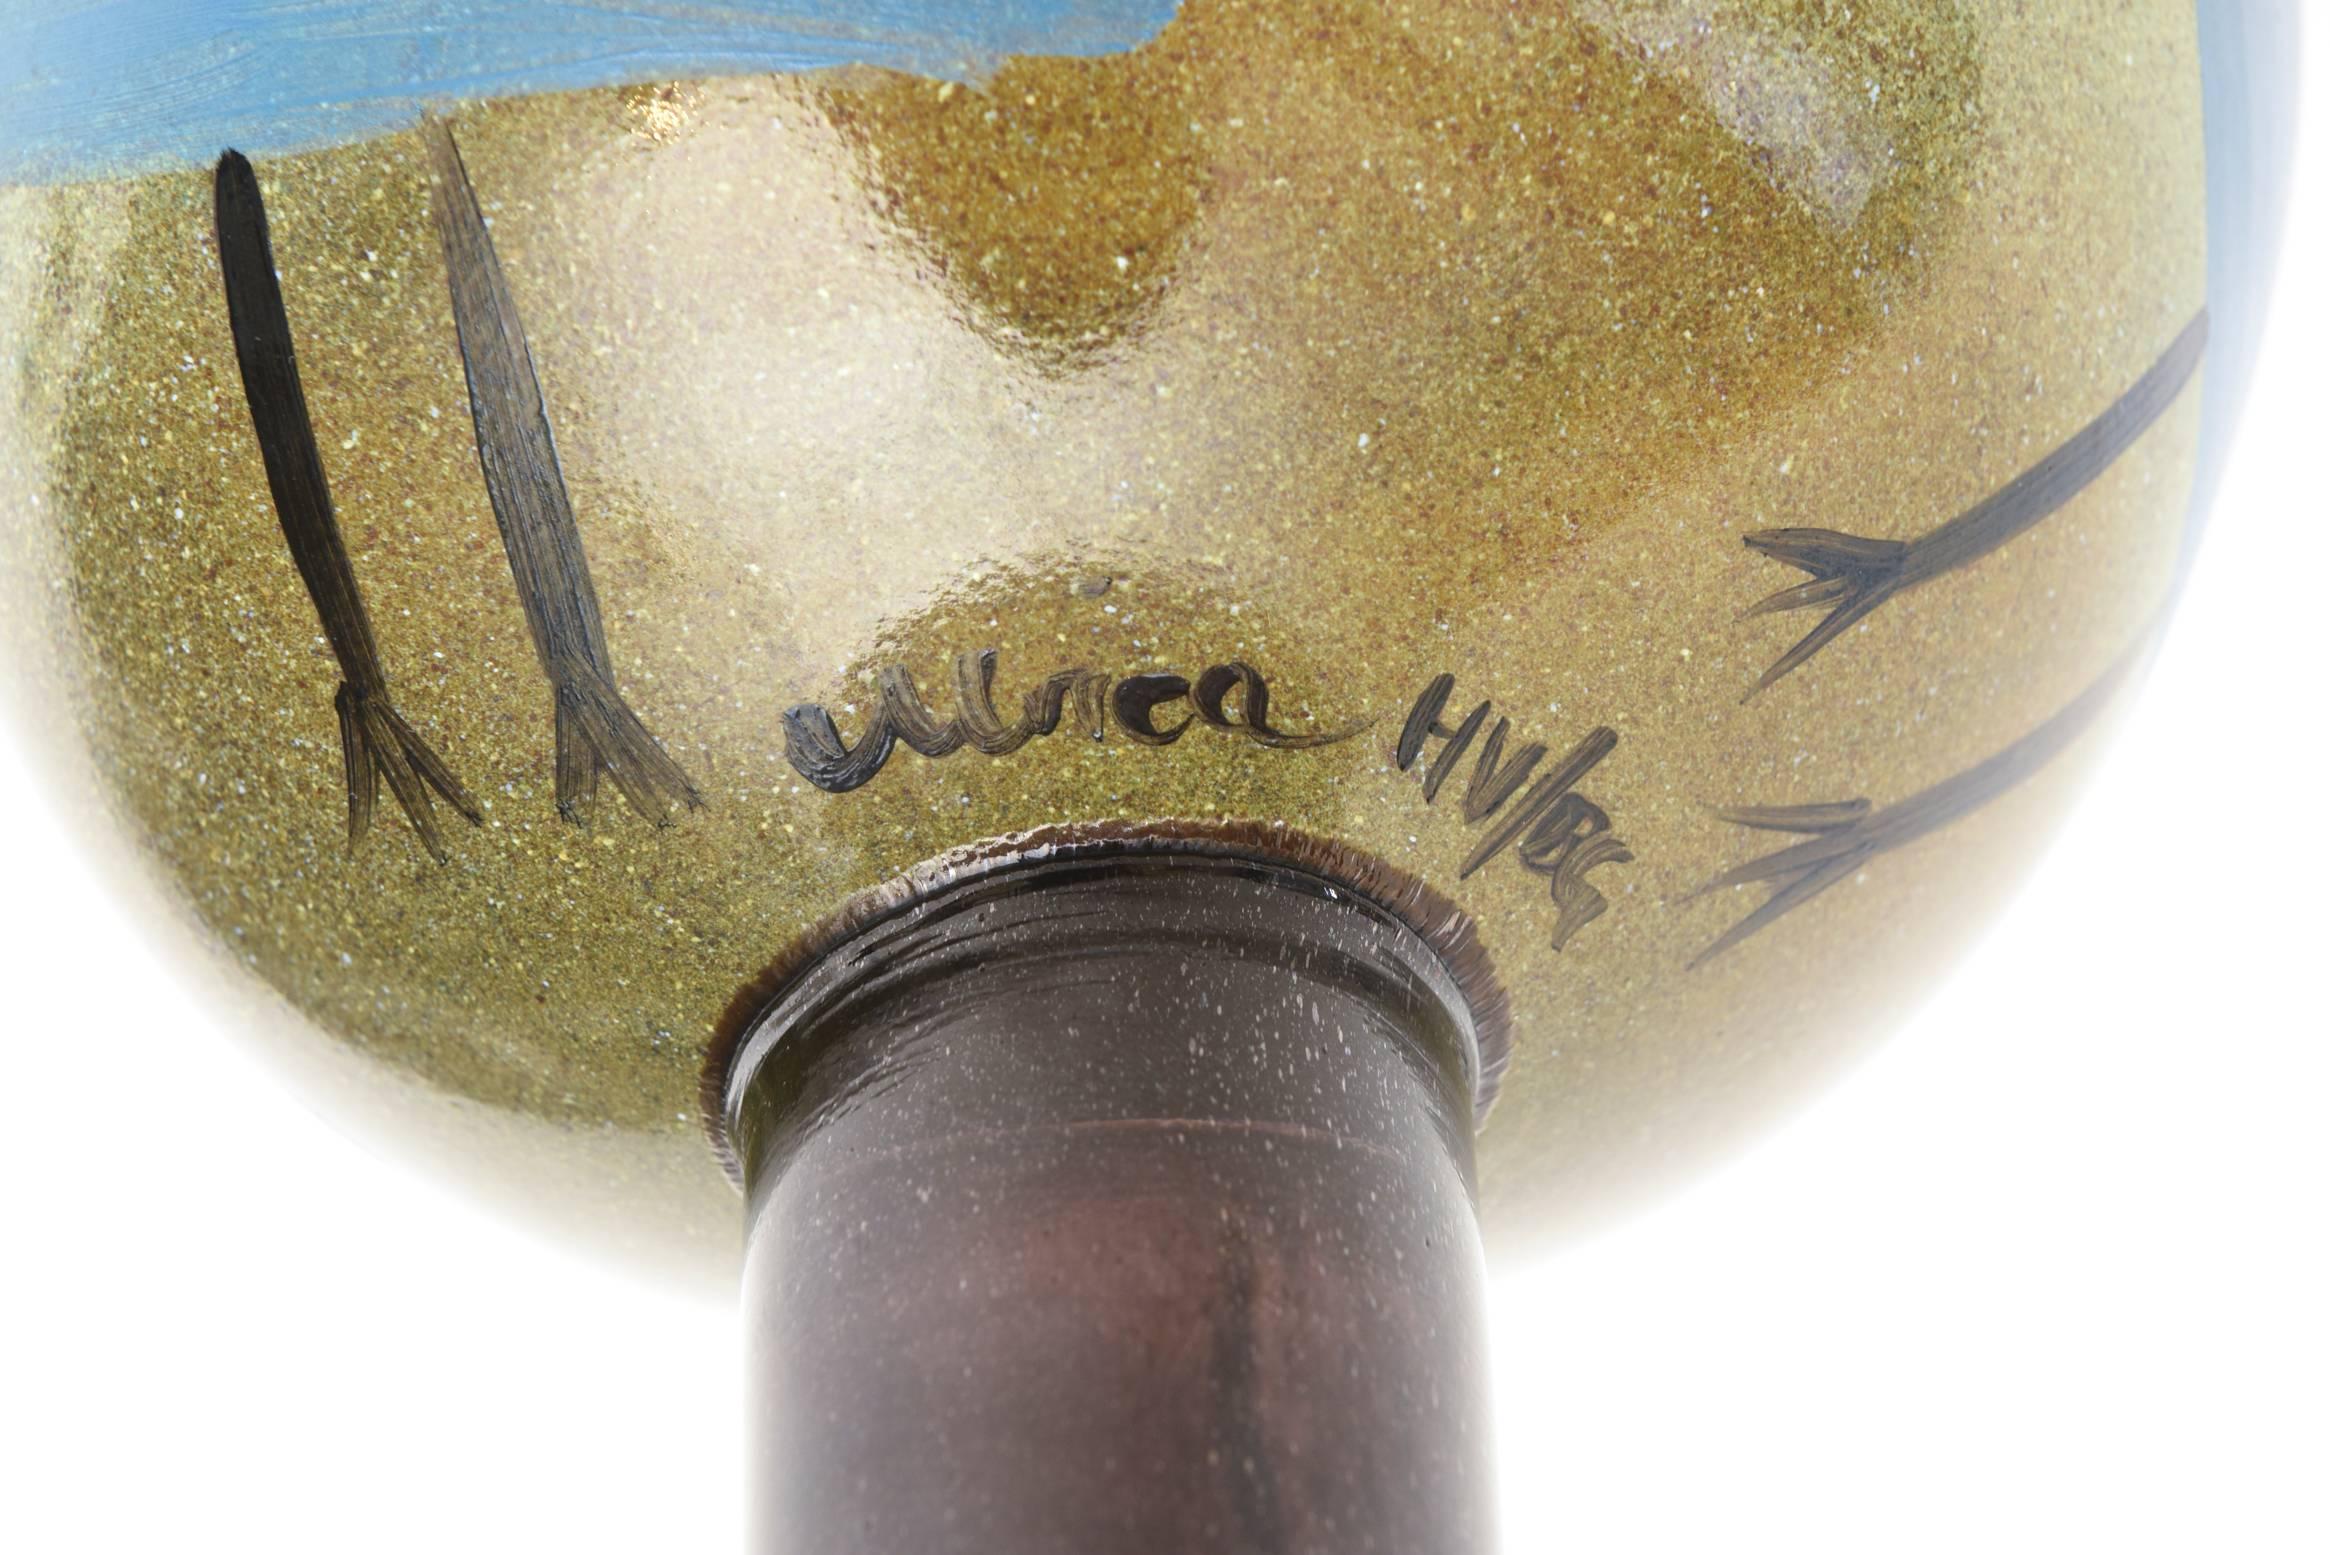 Signed Kosta Boda Hand-Painted Glass Vase/ Vessel/ Object/Sculpture /SALE 2